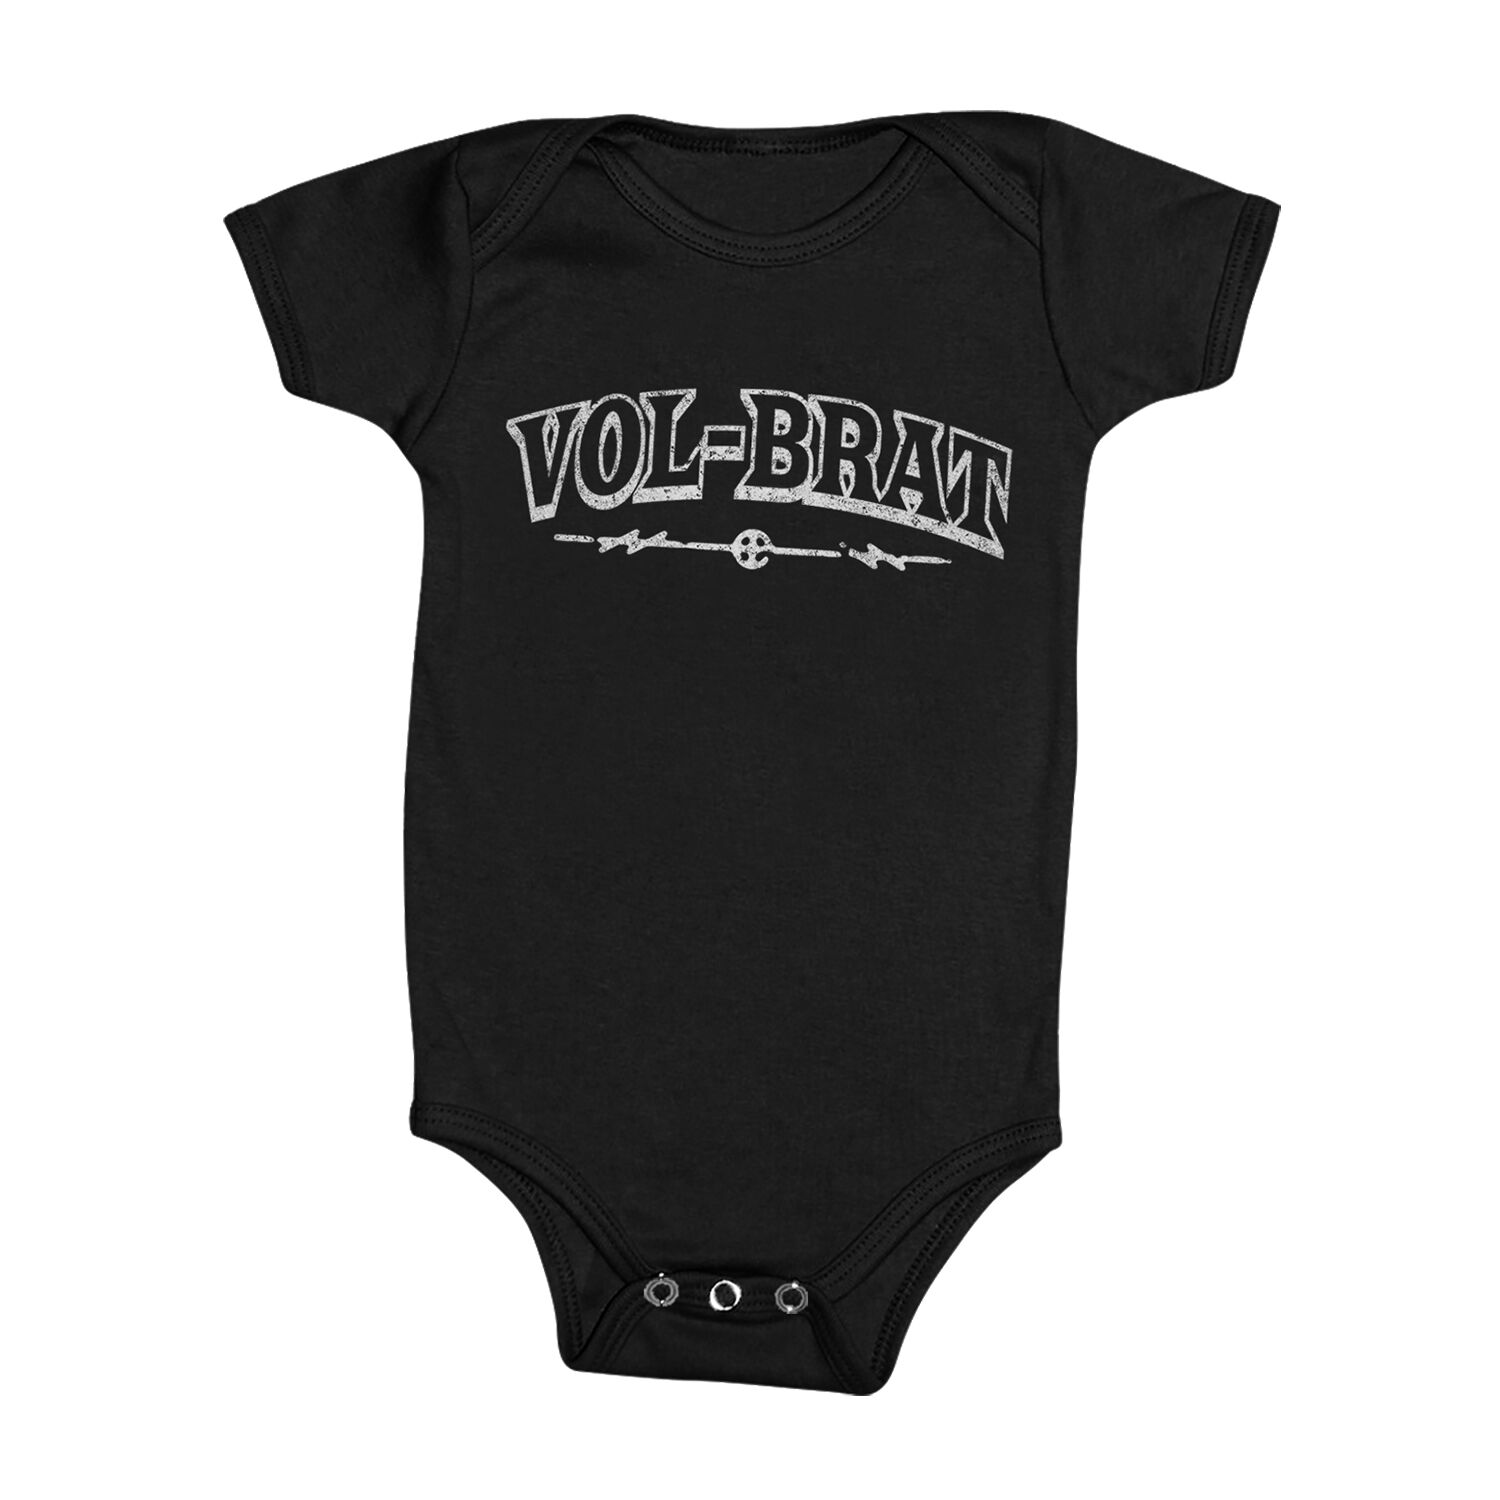 volbeat t-shirt model:5 volbeat t shirt toddler clothing boy girl Children kid 